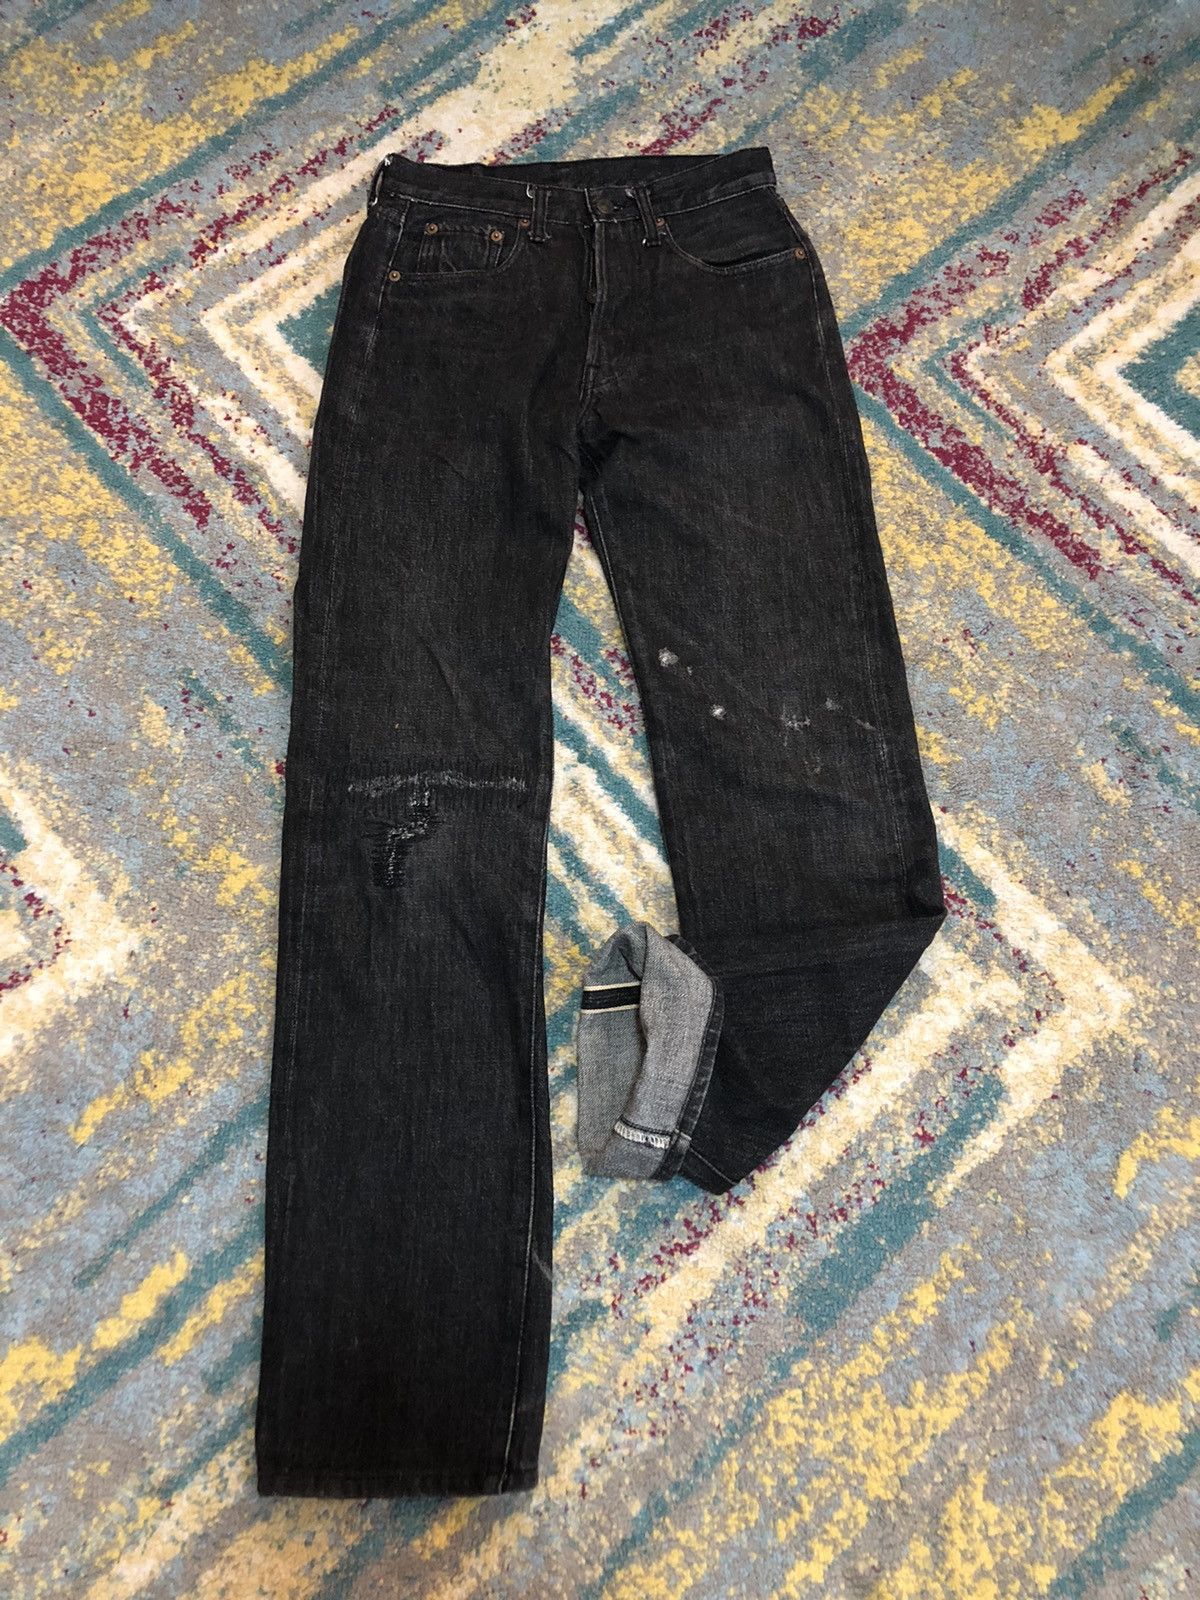 Denime selvedge jeans super black - 1